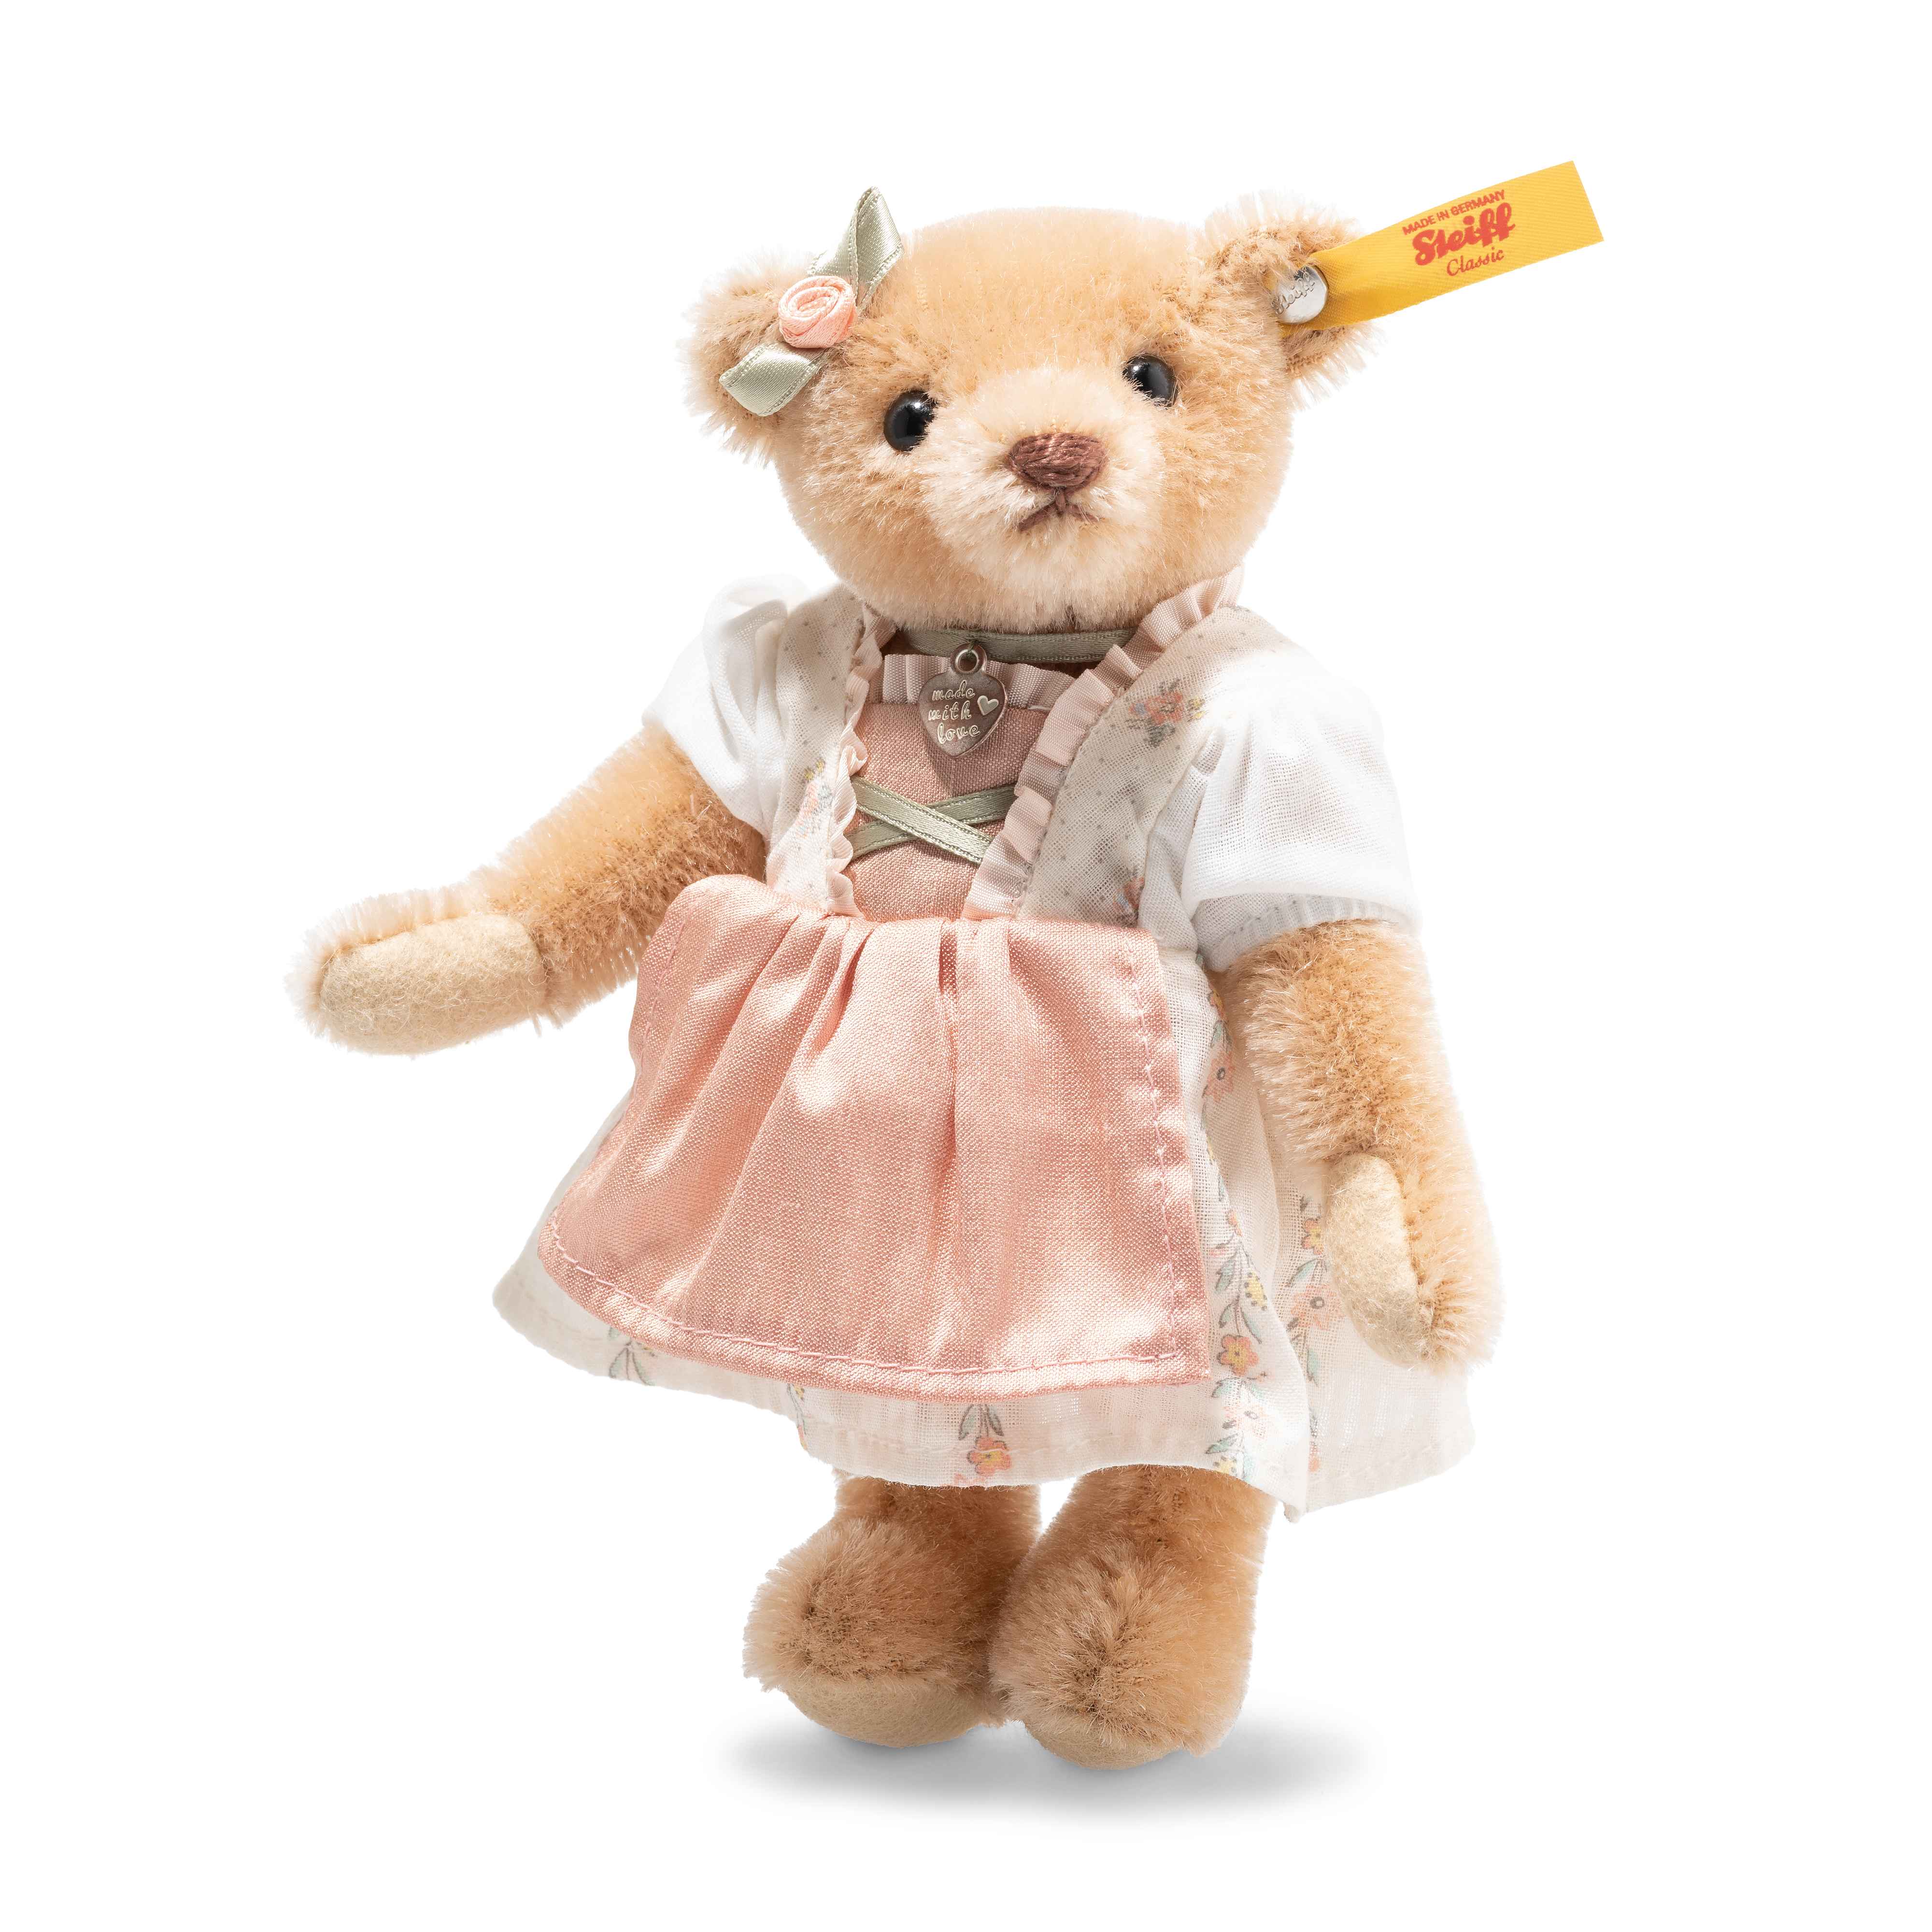 Steiff wճ}: Great Escapes Munich Teddy Bear in gift box